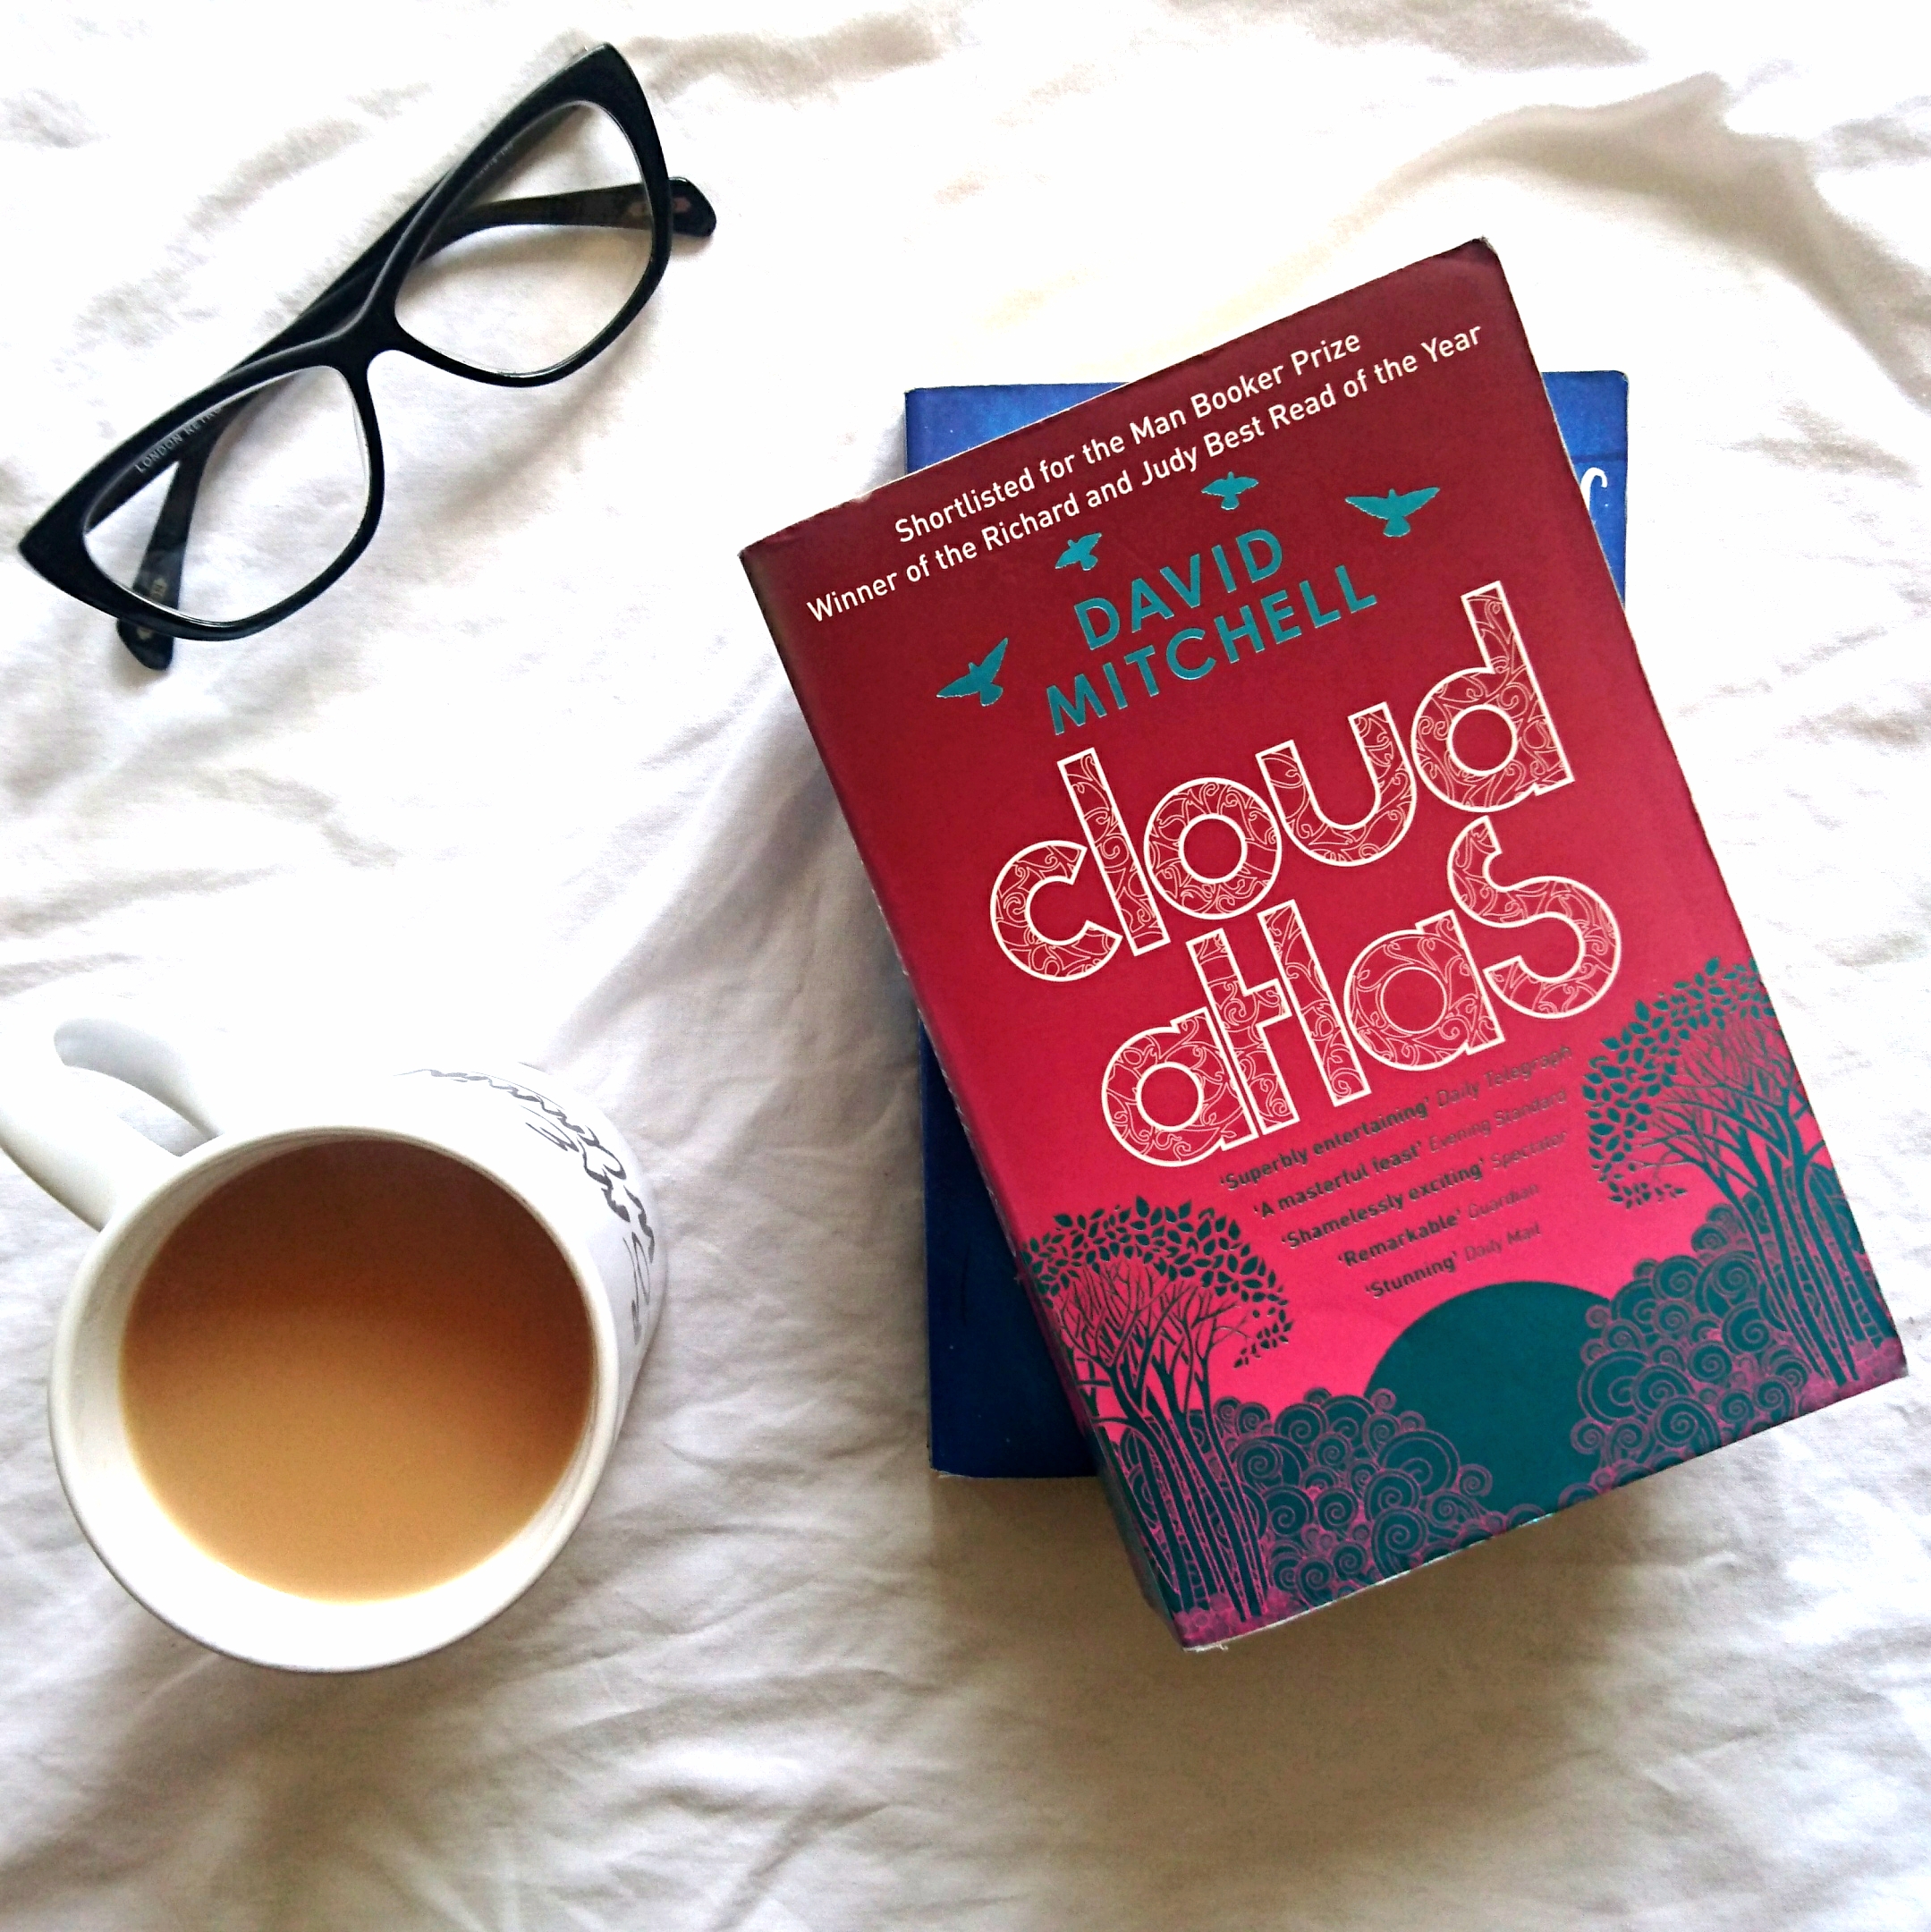 cloud atlas book review new york times